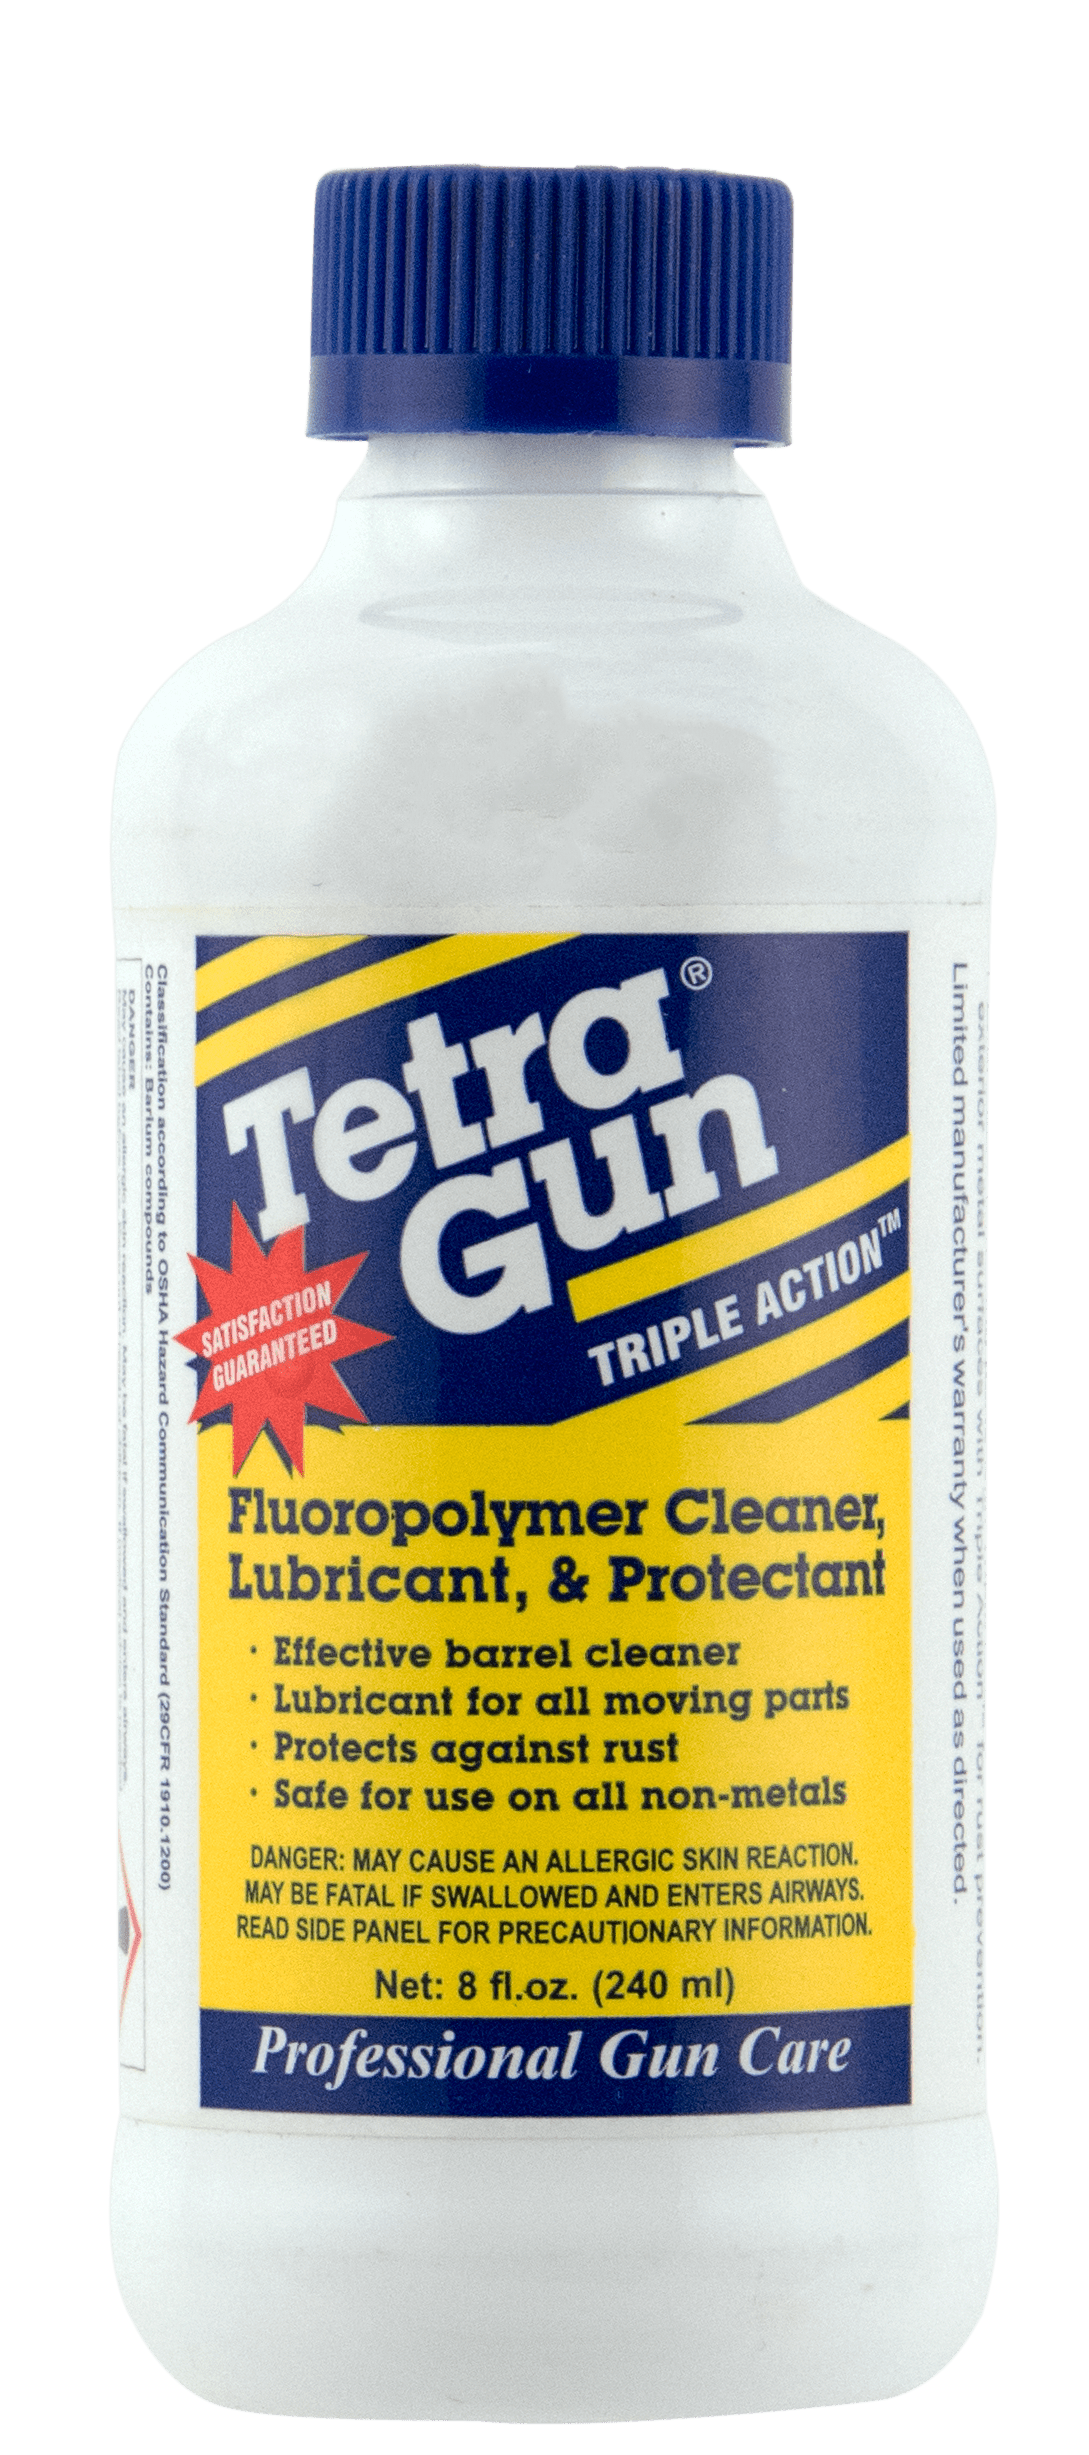 Tetra Tetra Triple Action, Tetra 1082 Cleaner Lubricant Protectant 8oz Gun Care